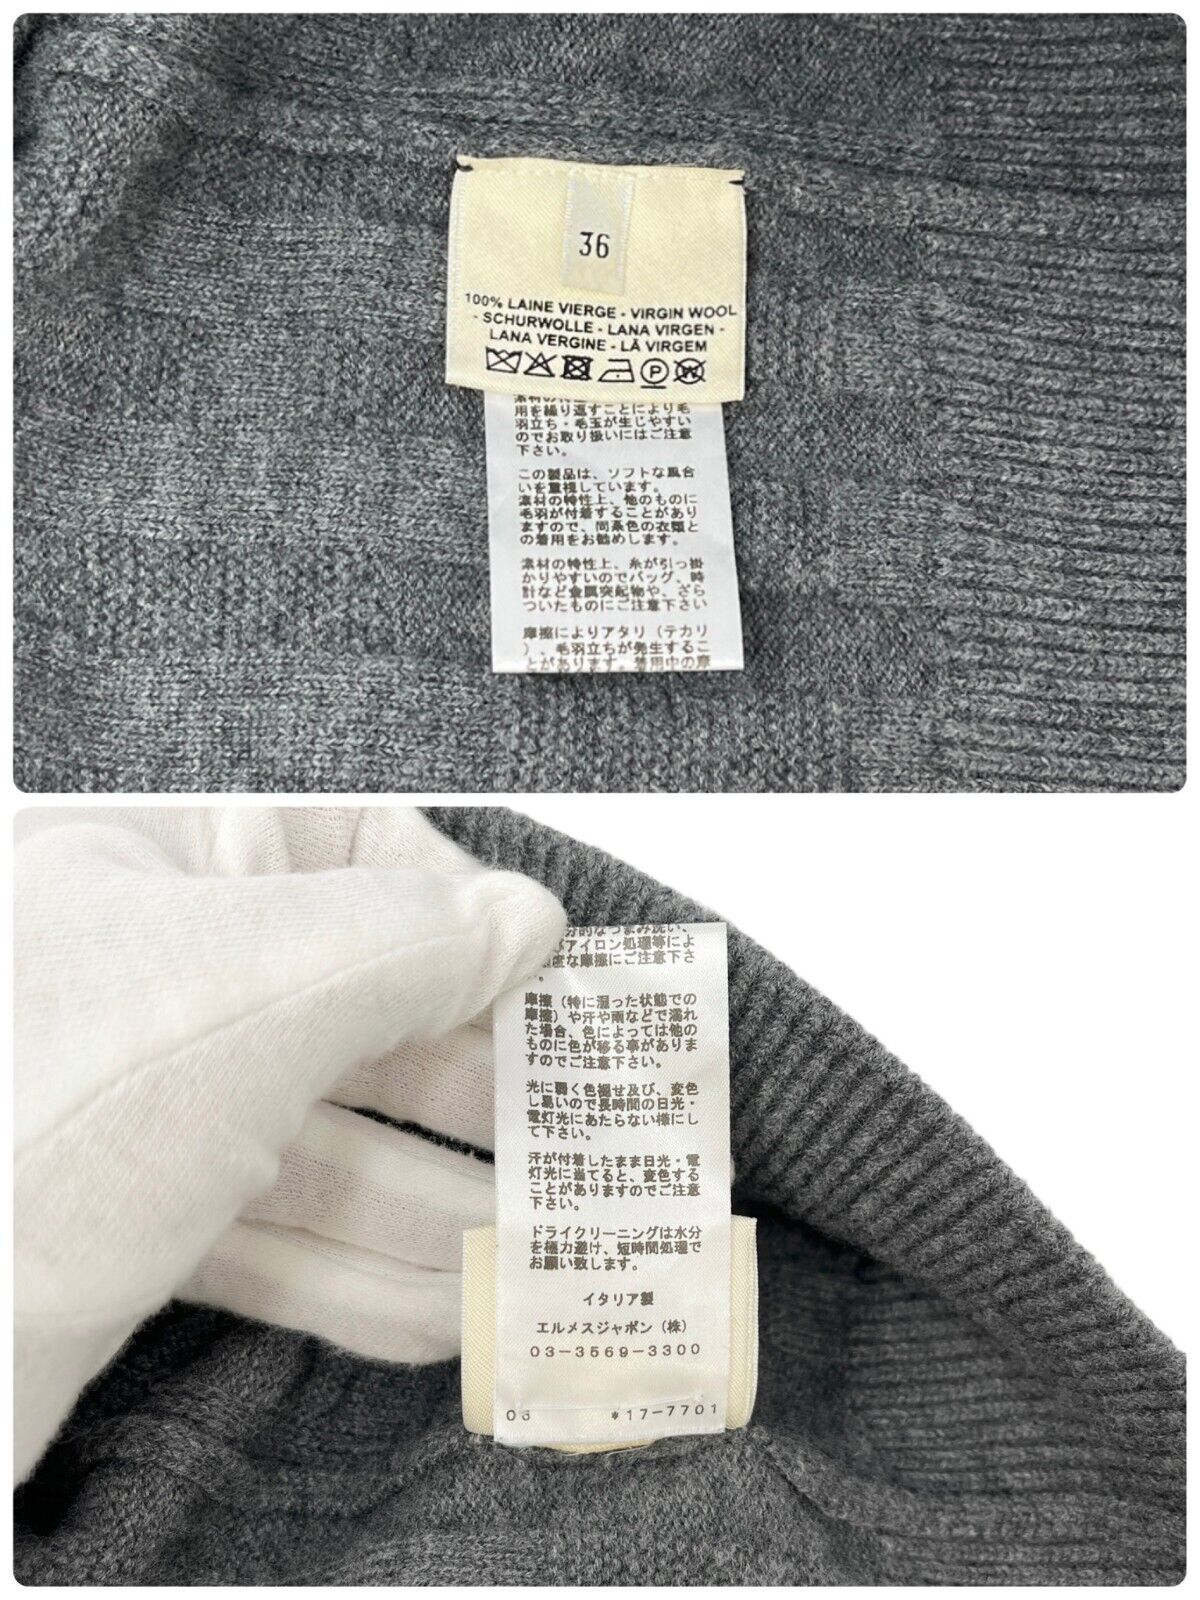 HERMES Vintage H Monogram Logo Knit Dress #36 Sweater Gray Wool Rank AB+